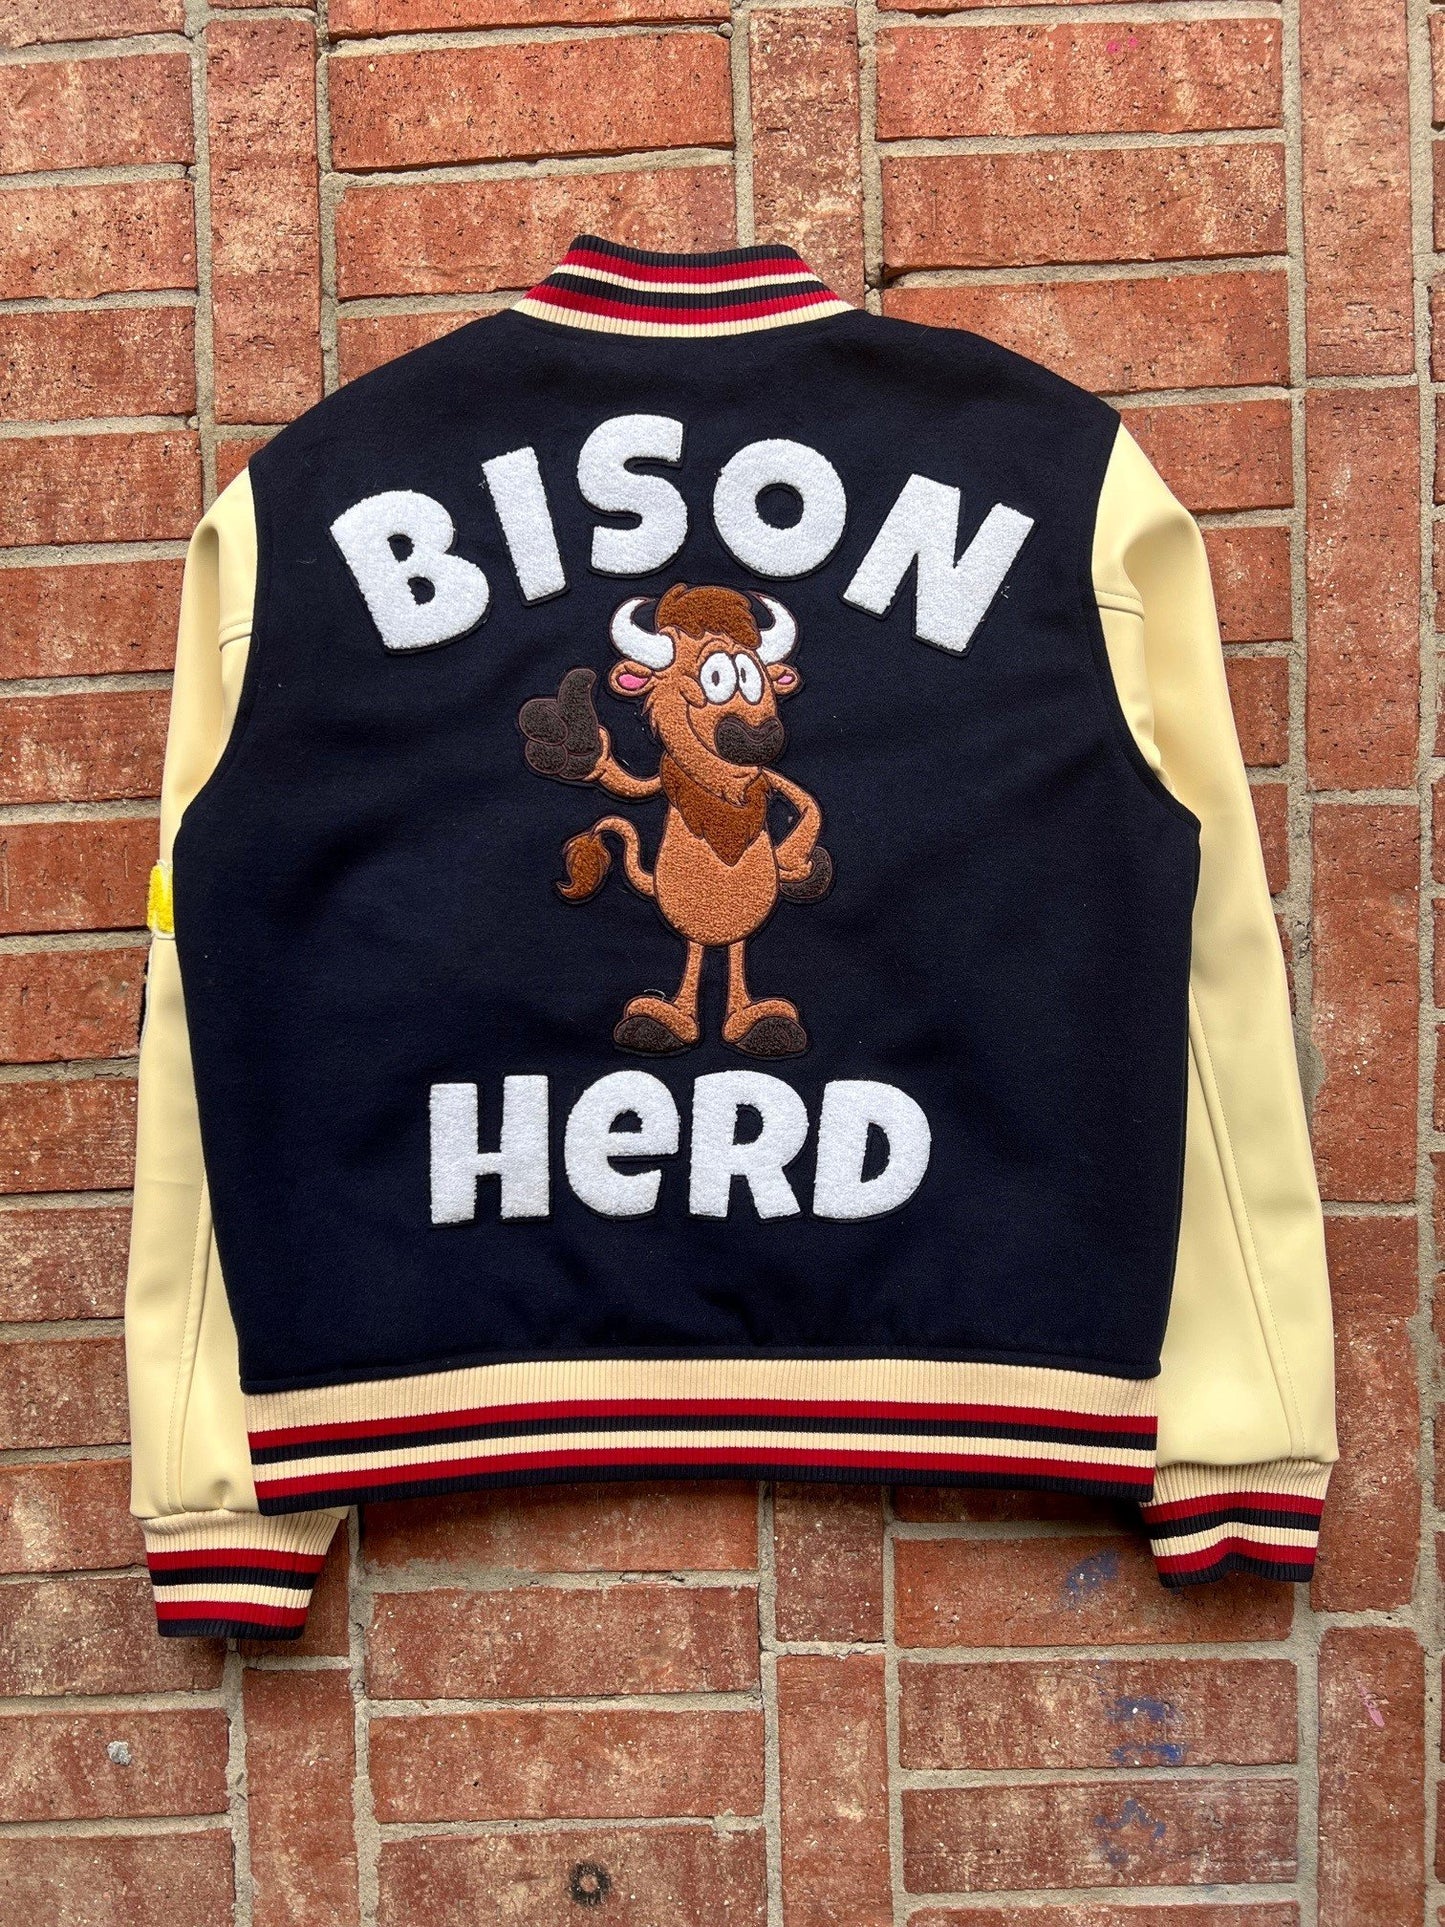 BISON Herd Letterman Jacket